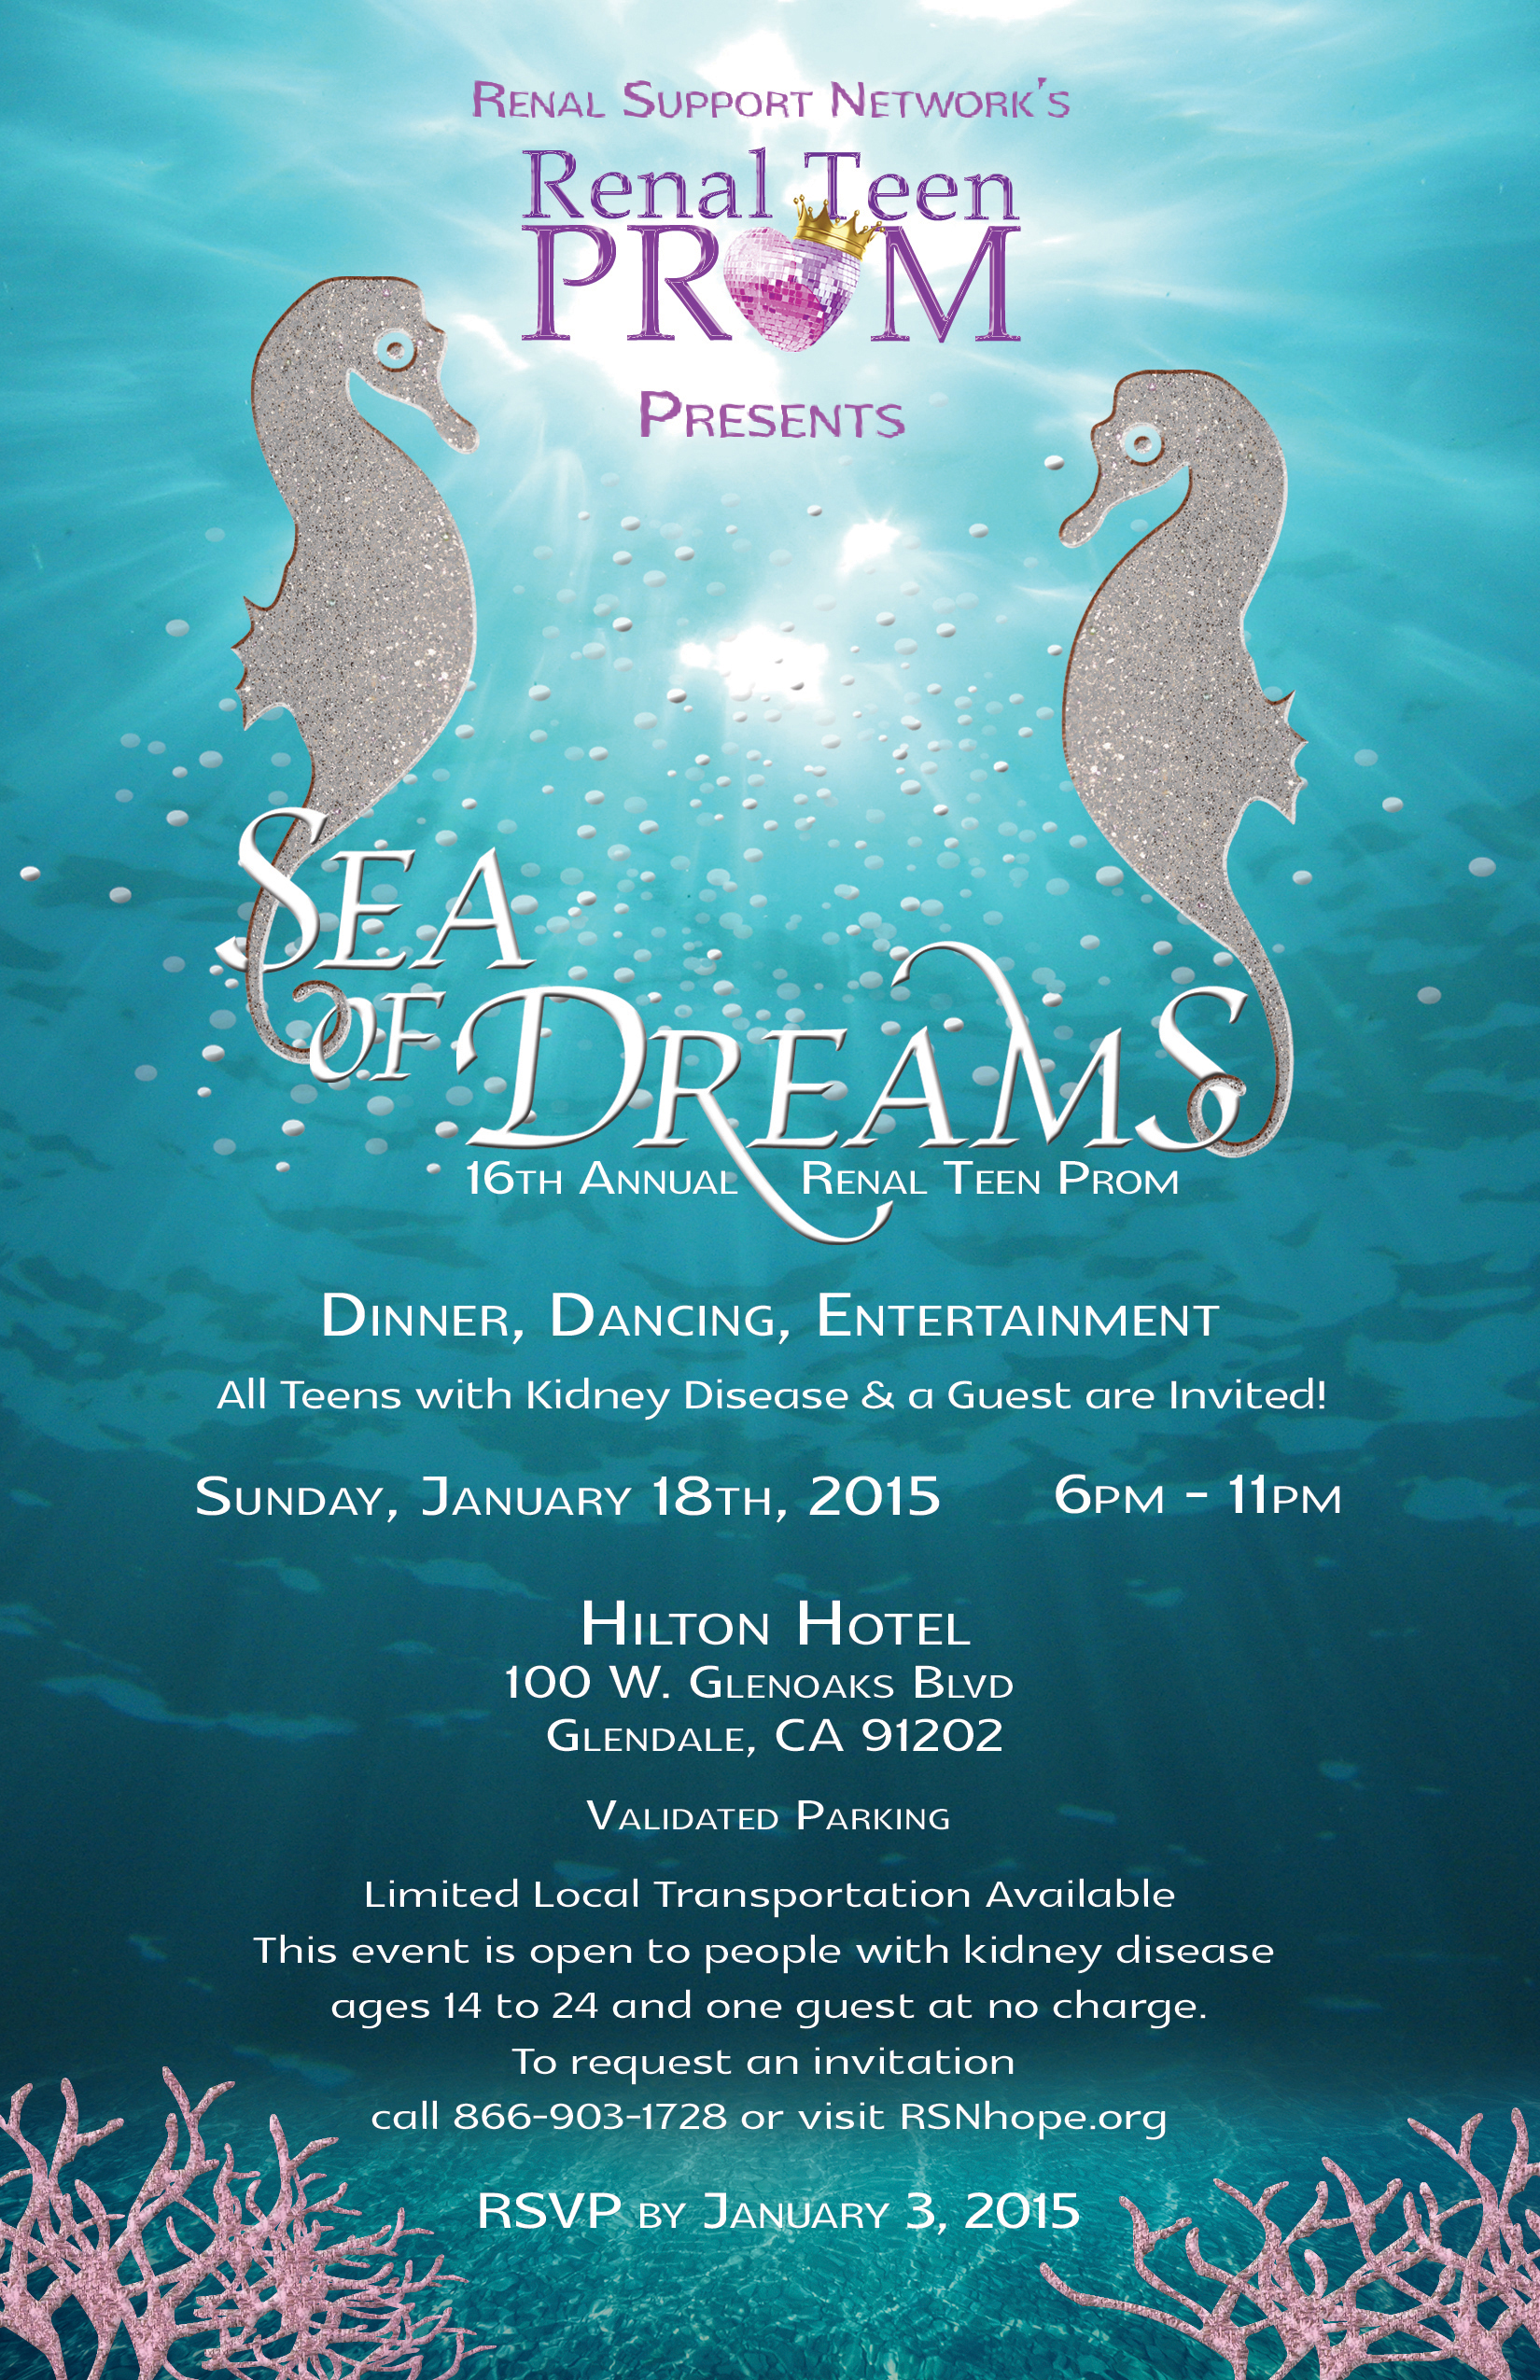 Renal teen prom - 16th annual renal teen prom - sea of dreams